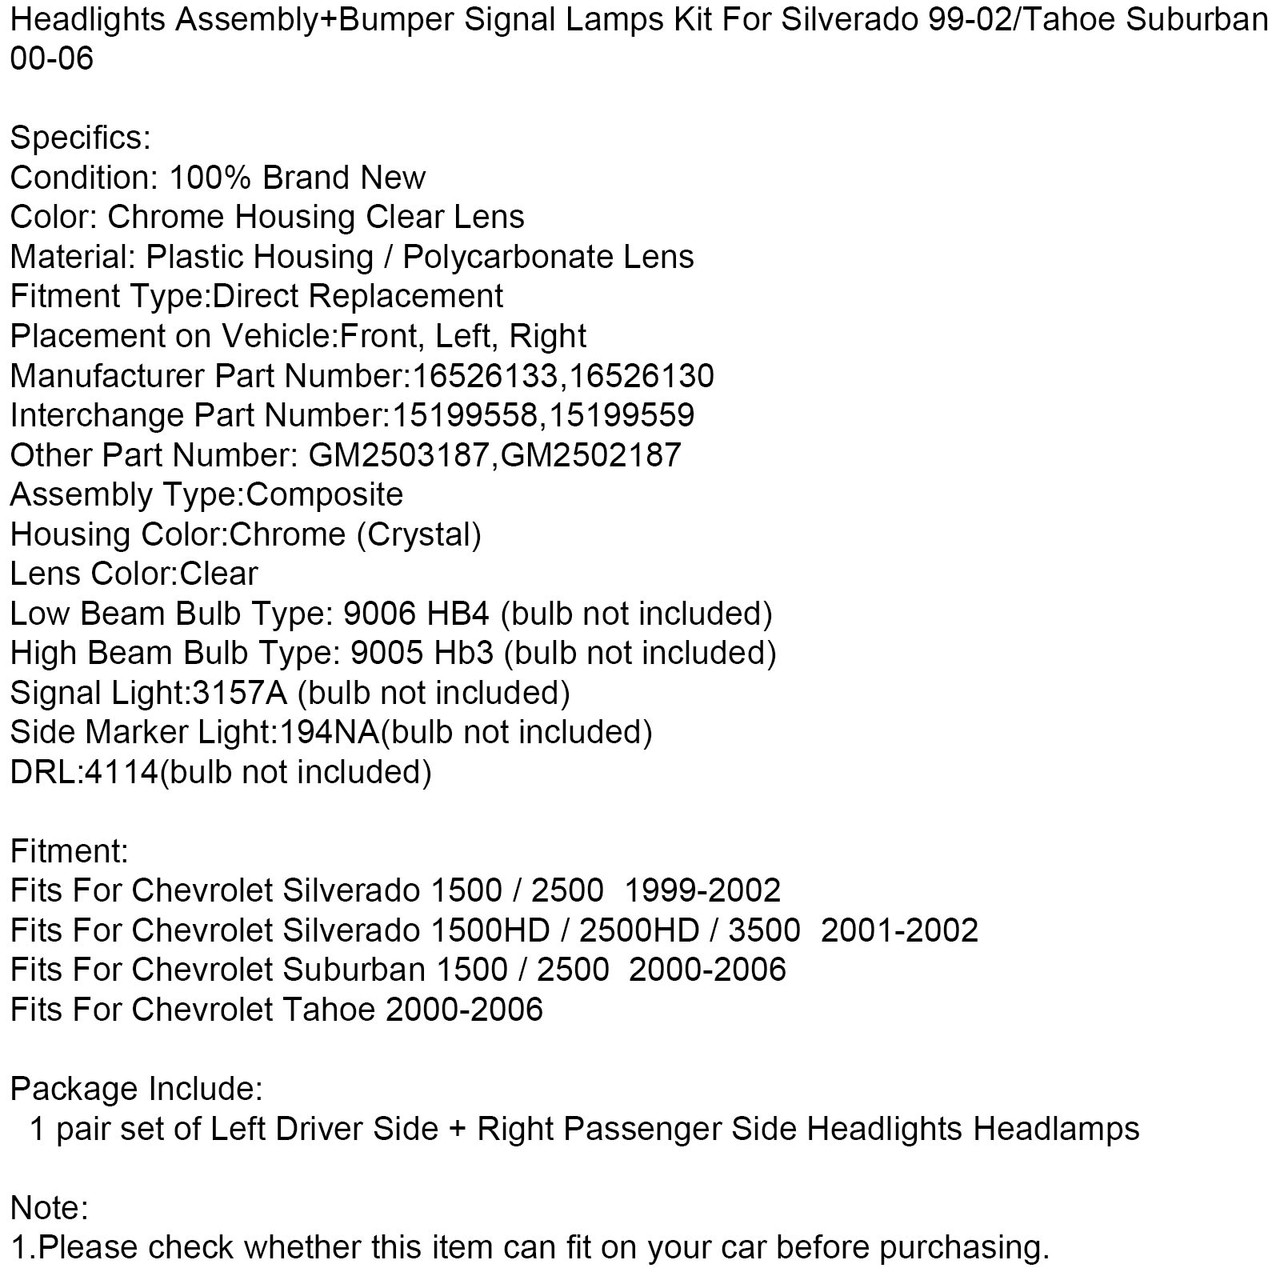 Headlights Assembly+Bumper Signal Lamps For Silverado 99-02/Tahoe Suburban 00-06